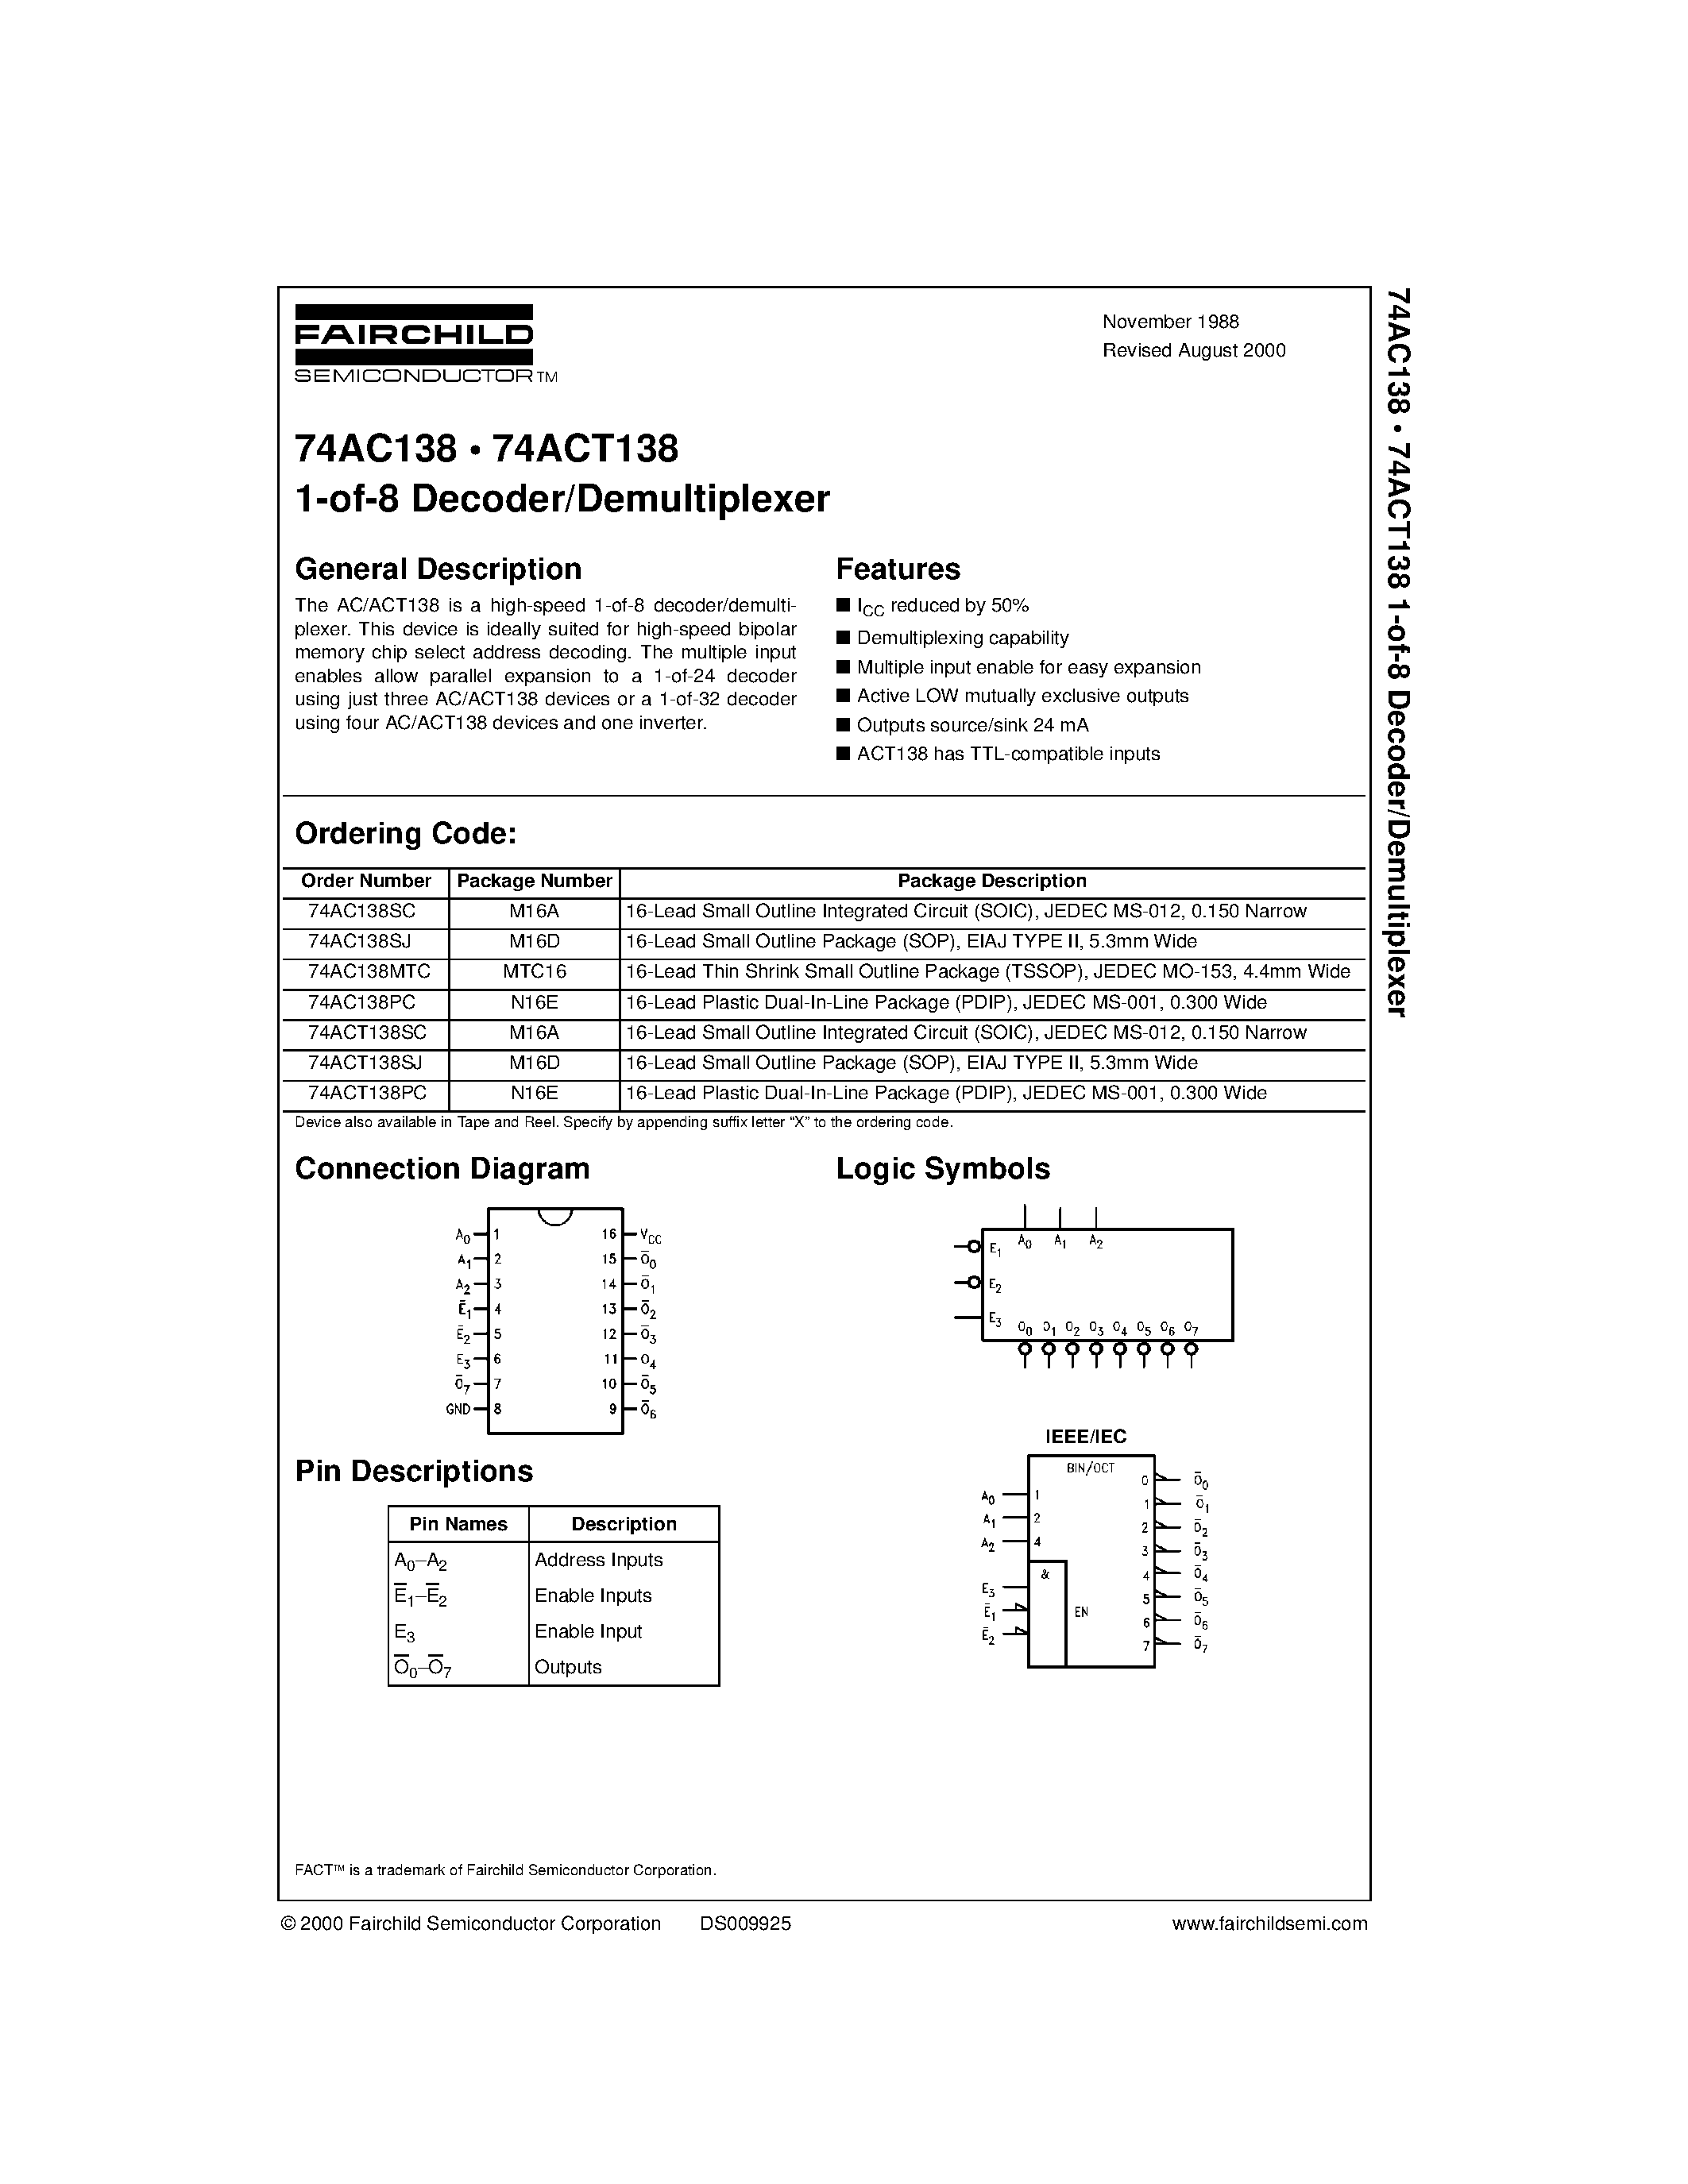 Datasheet 74AC138PC - 1-of-8 Decoder/Demultiplexer page 1